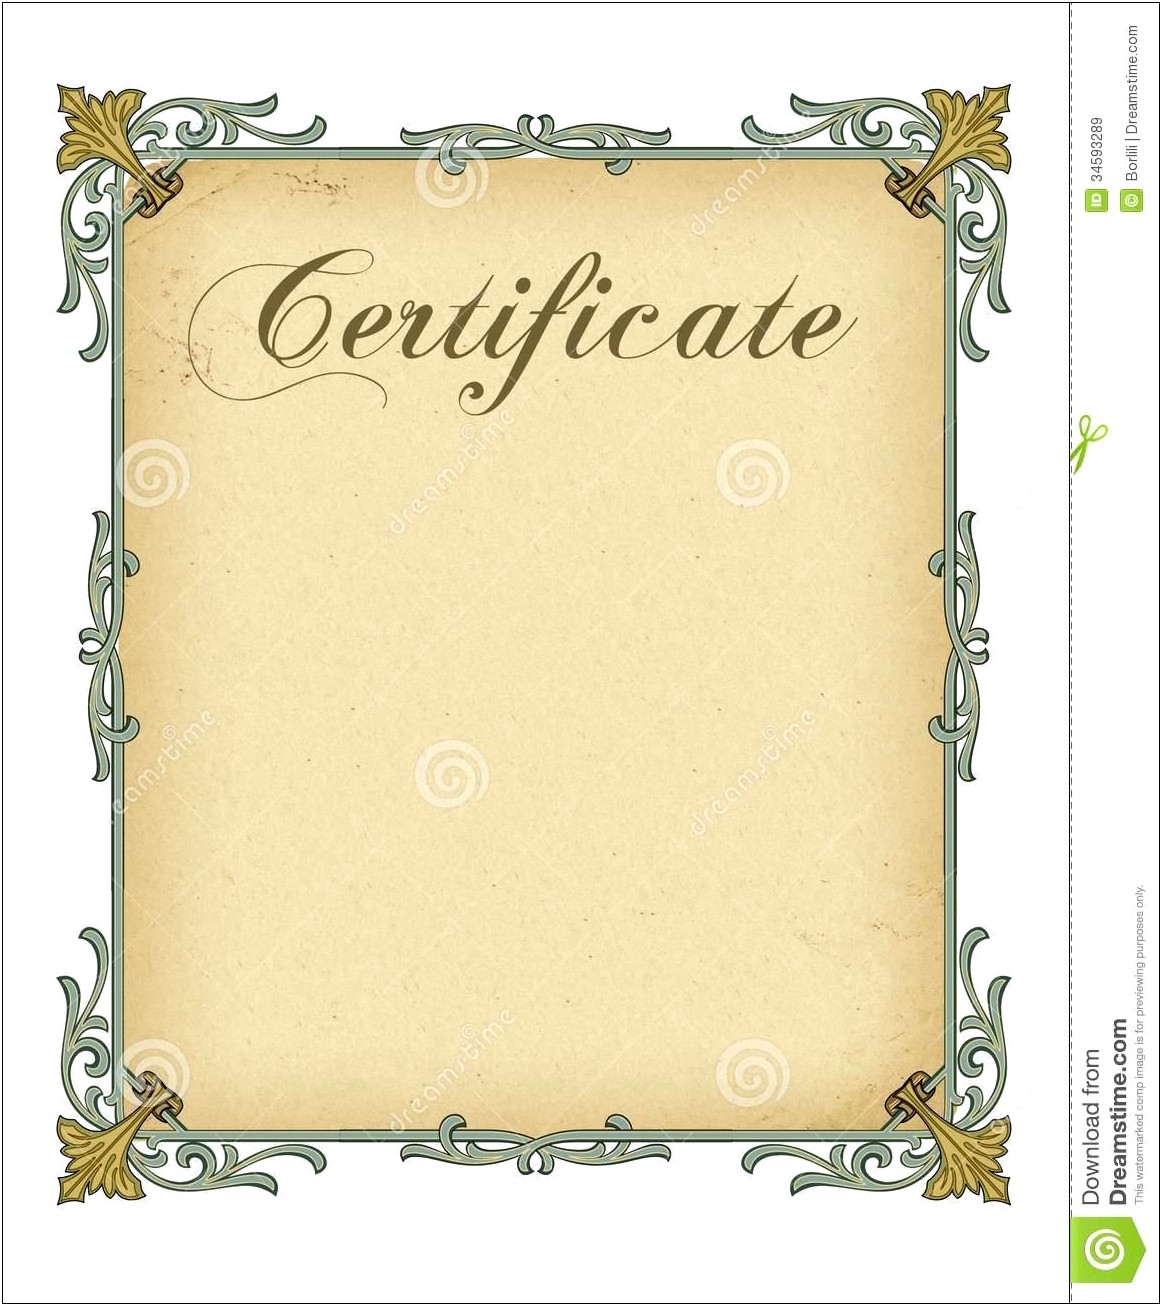 Free 10 Year Service Award Certificate Template